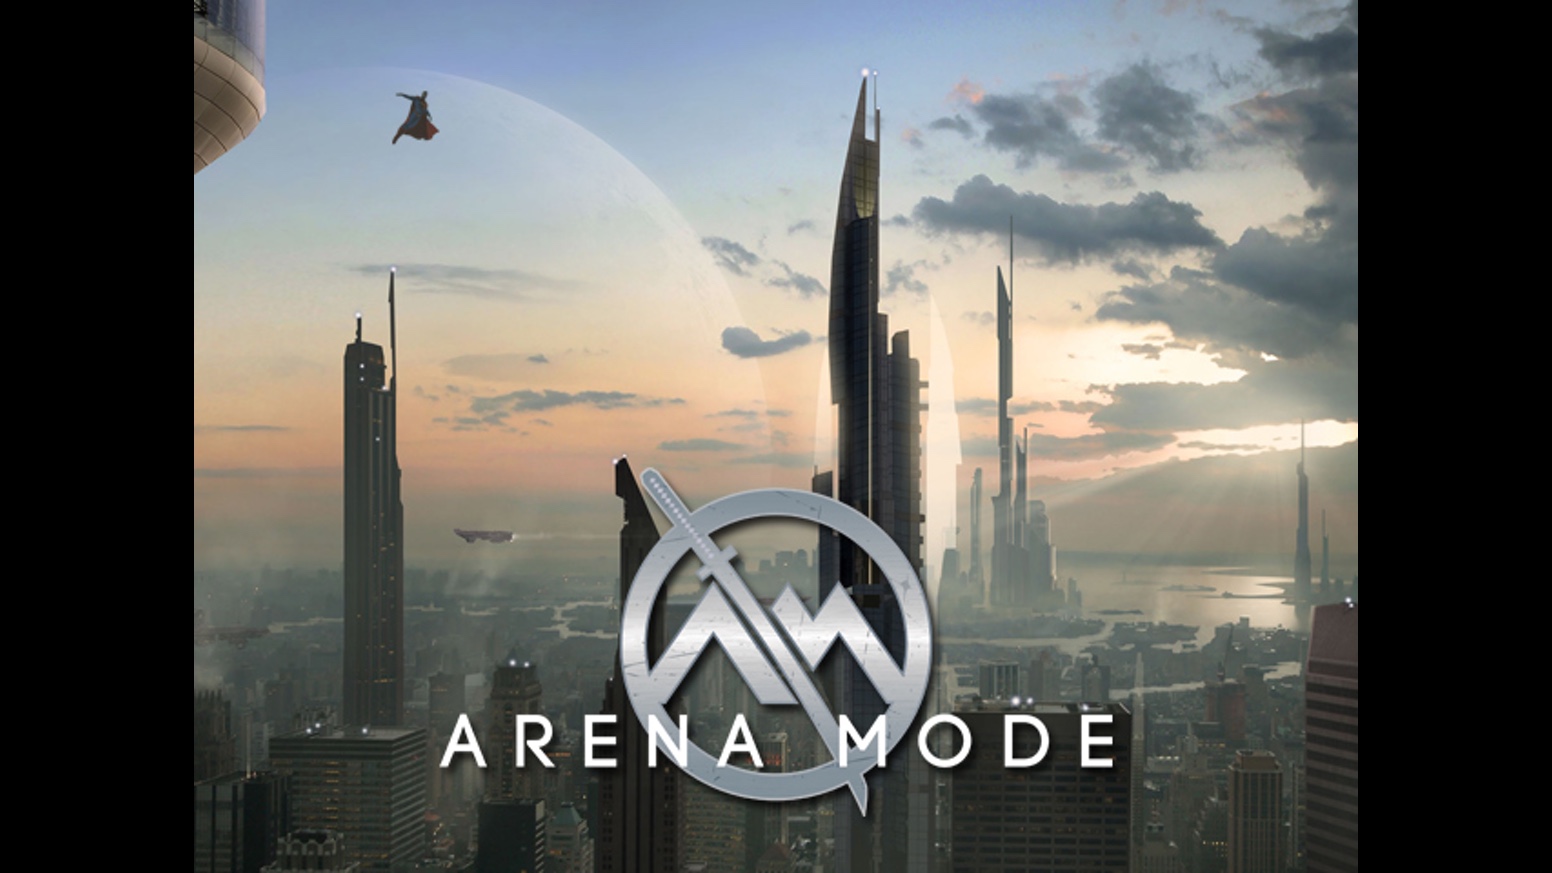 Arena Mode HD wallpapers, Desktop wallpaper - most viewed